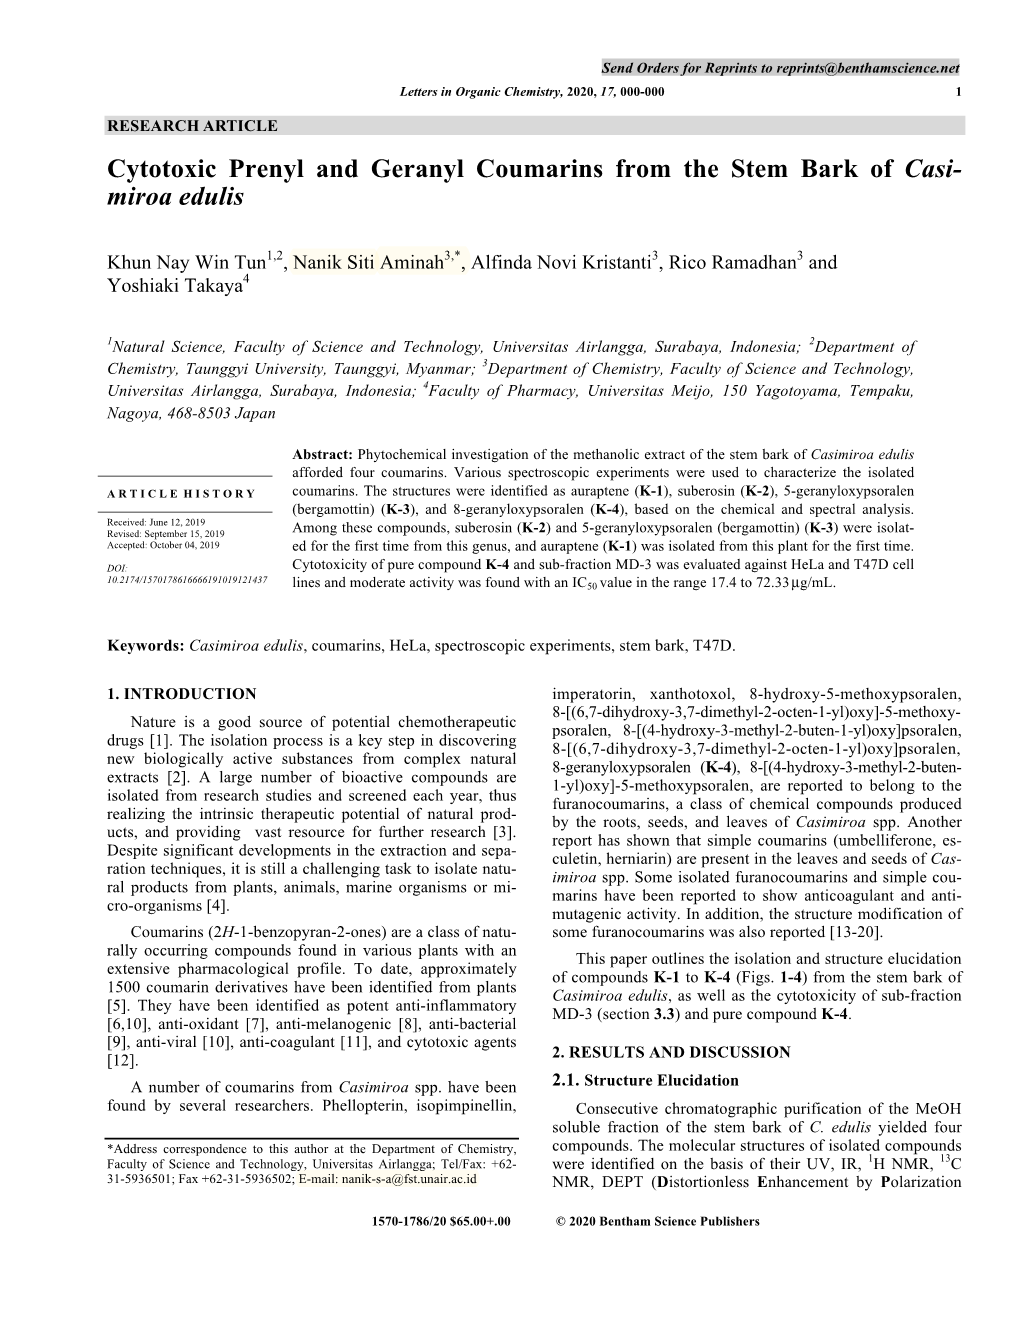 Cytotoxic Prenyl and Geranyl Coumarins from the Stem Bark of Casi- Miroa Edulis